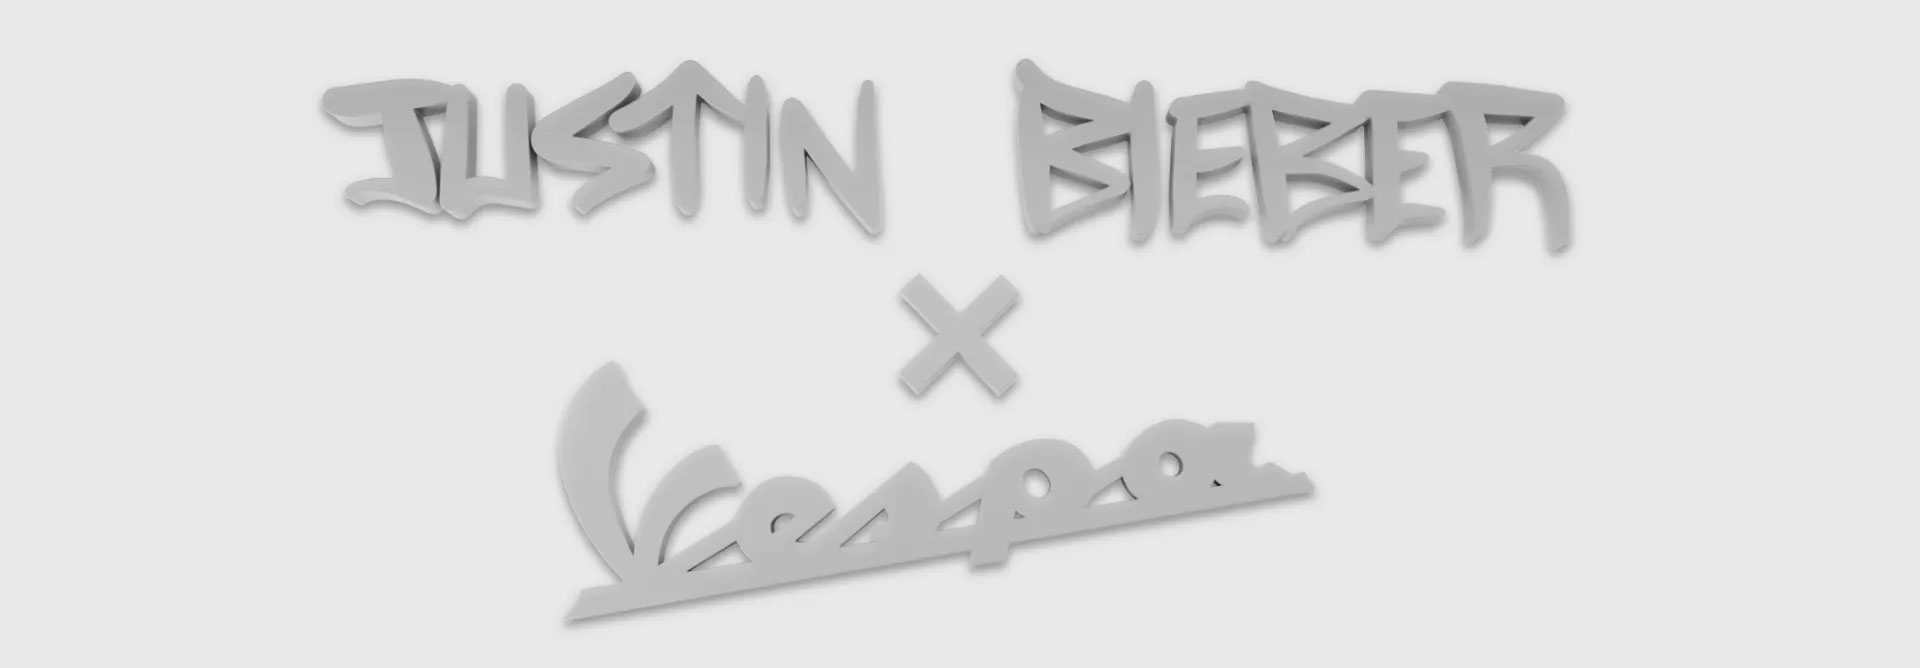 Justin Bieber Vespa Collaboration: Specs, Features, Photos